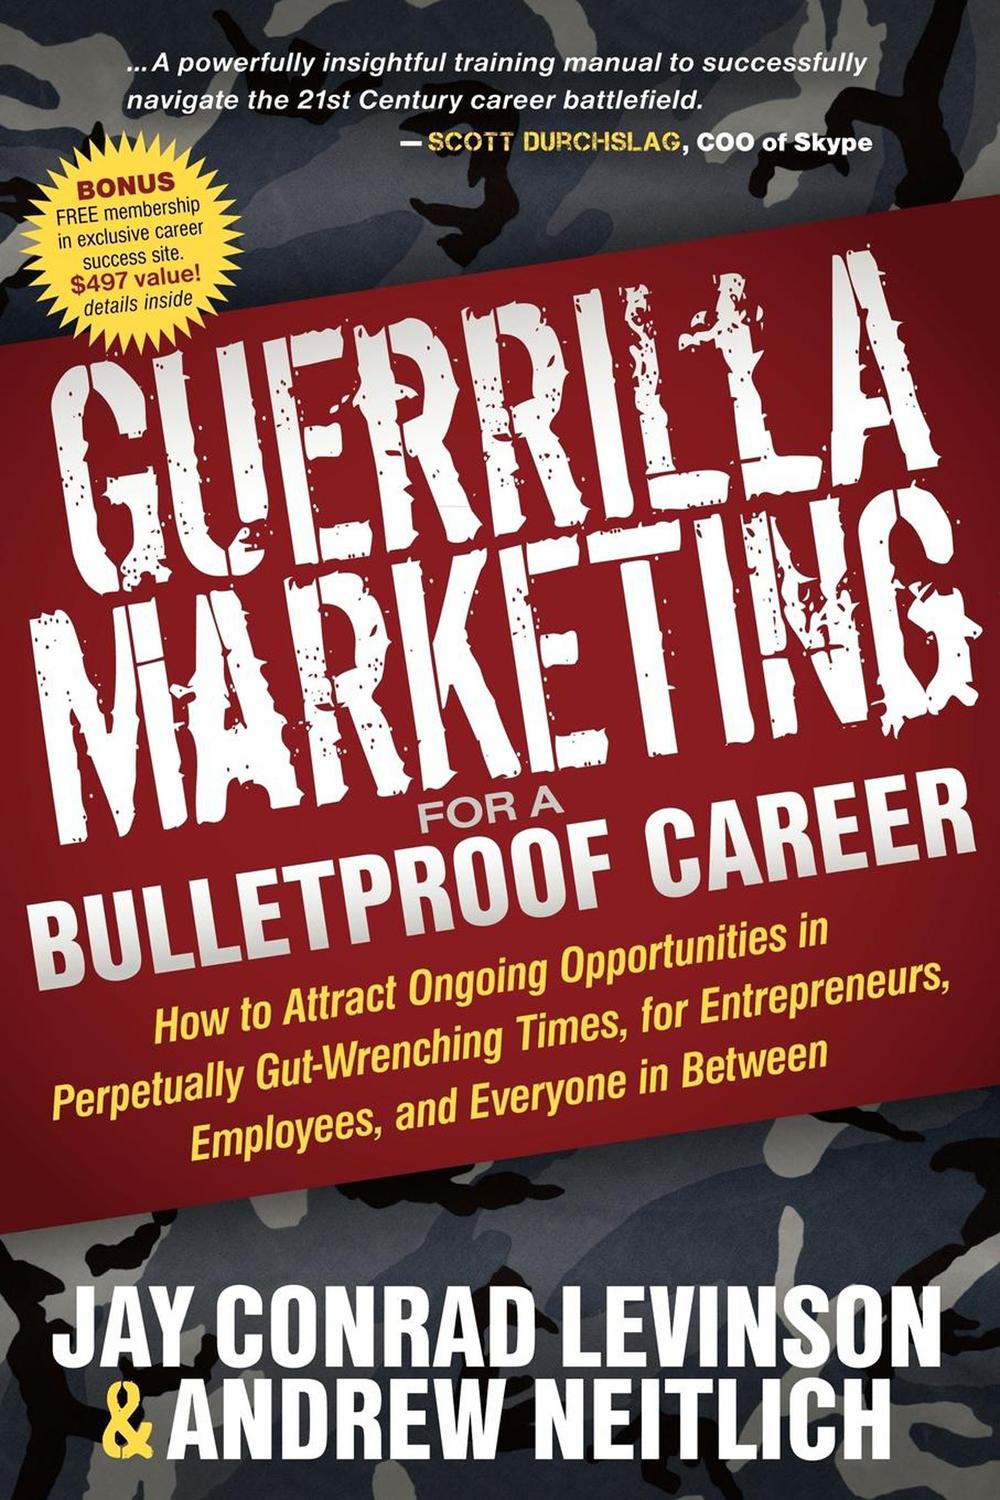 Guerrilla Marketing for a Bulletproof Career - Jay Conrad Levinson, Andrew Neitlich